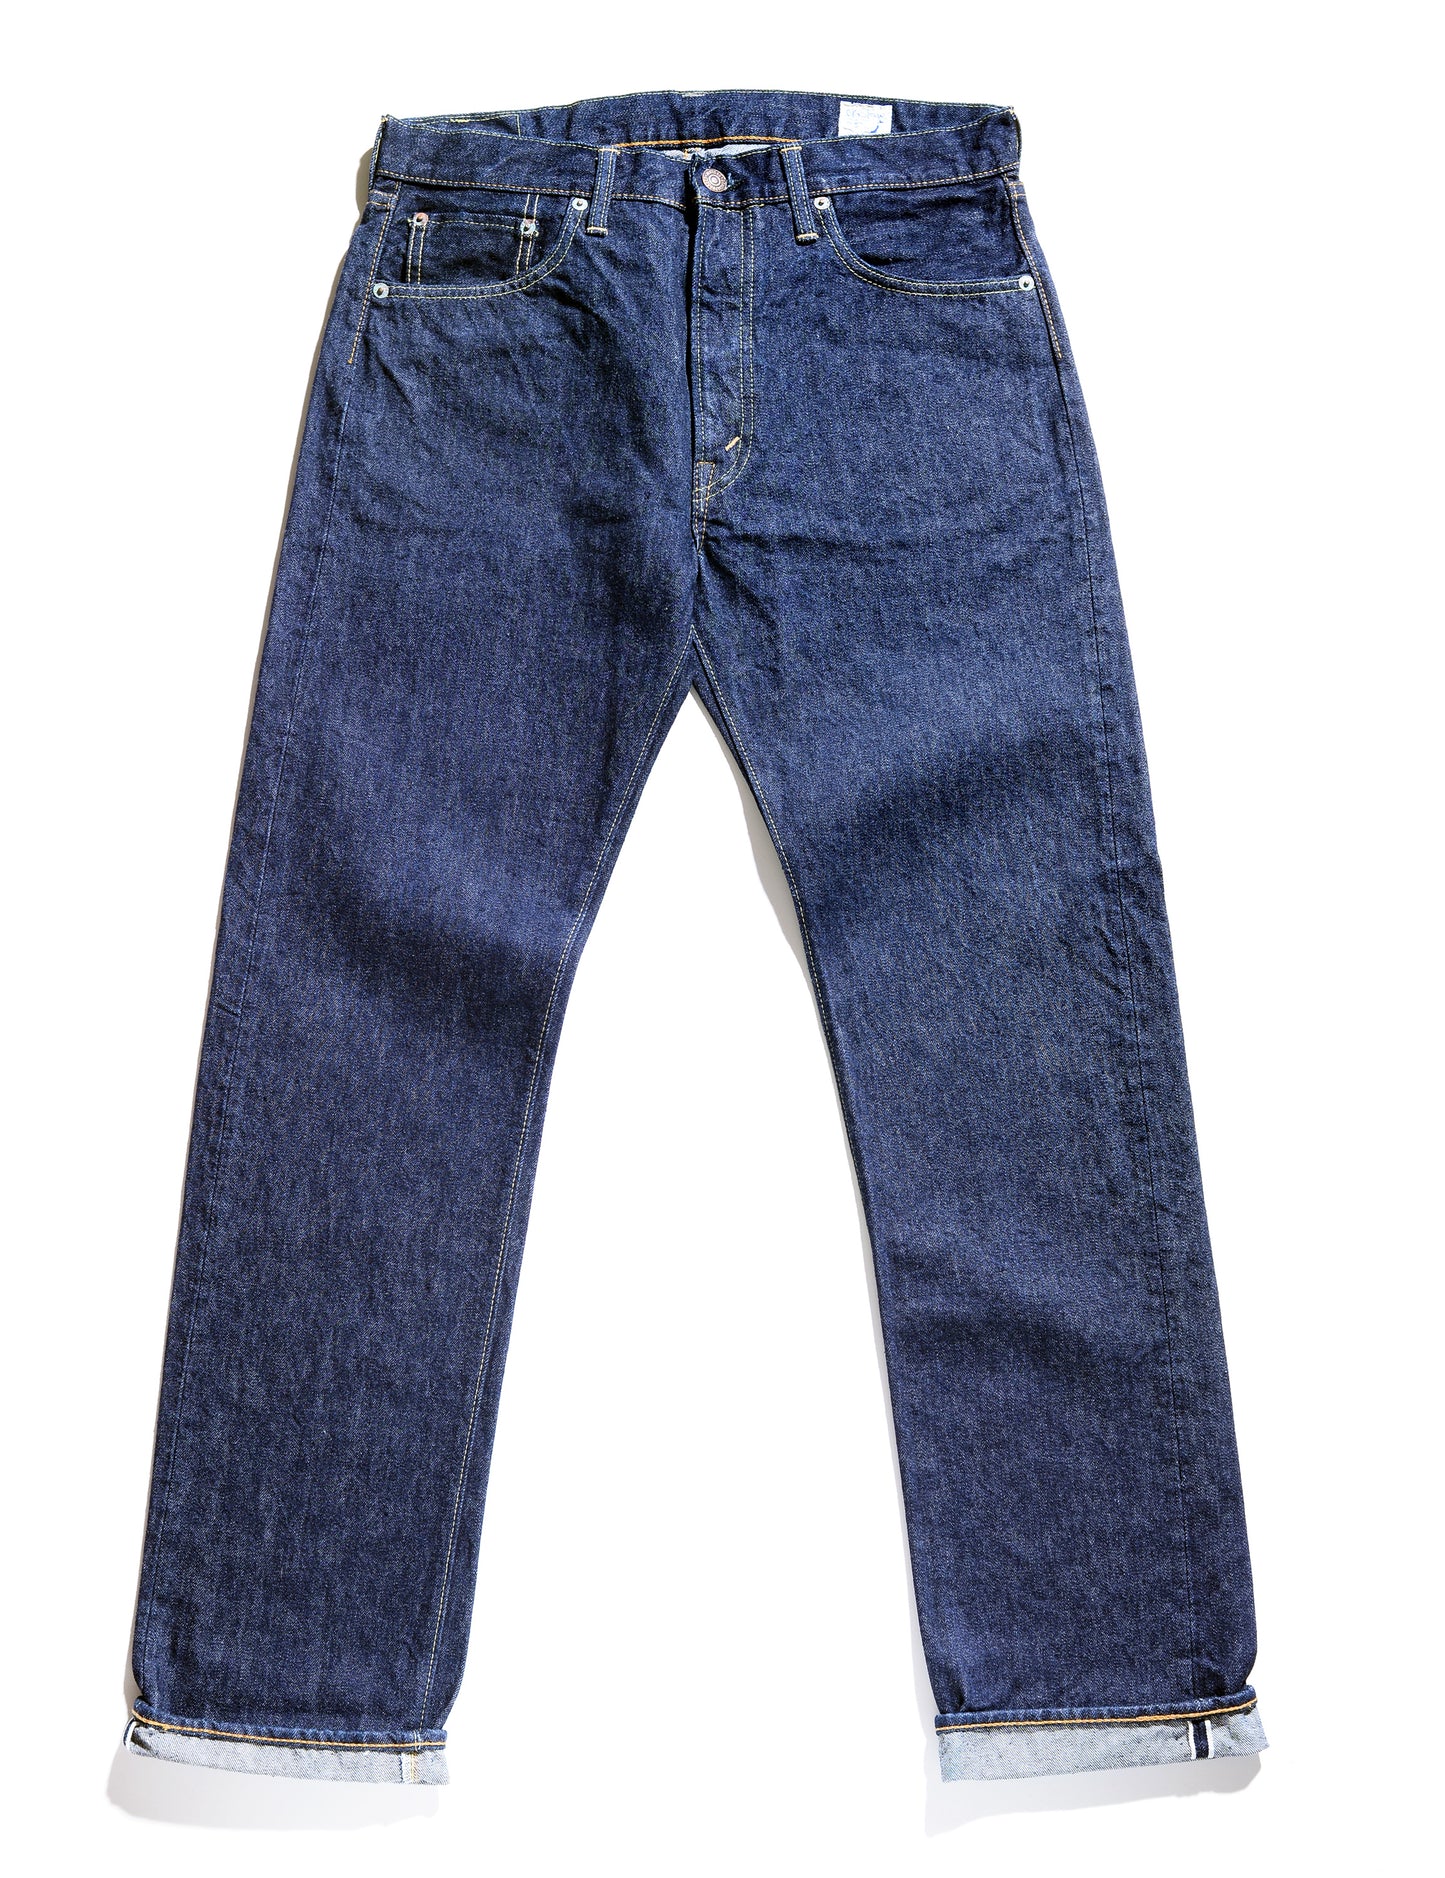 Full length shot of 107 Slim Fit Selvedge Denim Jeans - One Wash